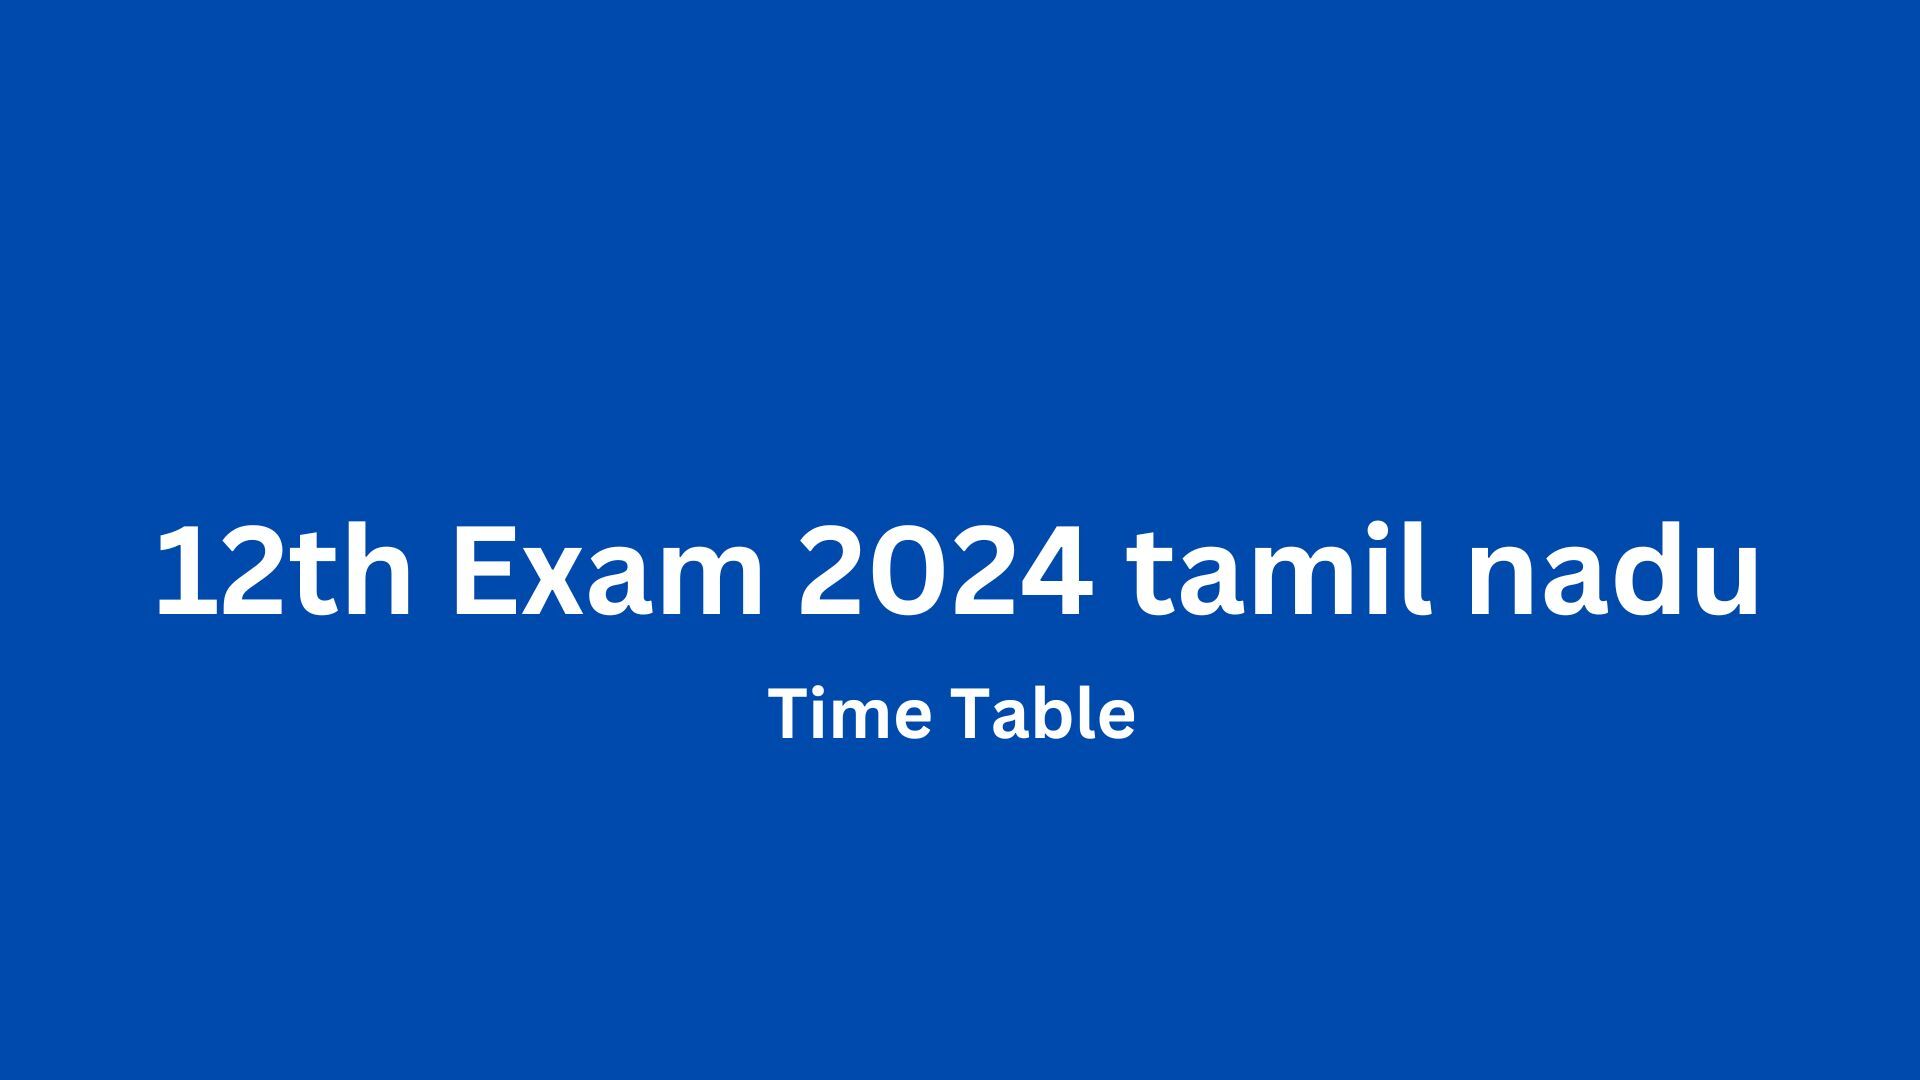 12th exam time table 2024 tamil nadu 12ஆம் வகுப்பு பொதுத்தேர்வு கால